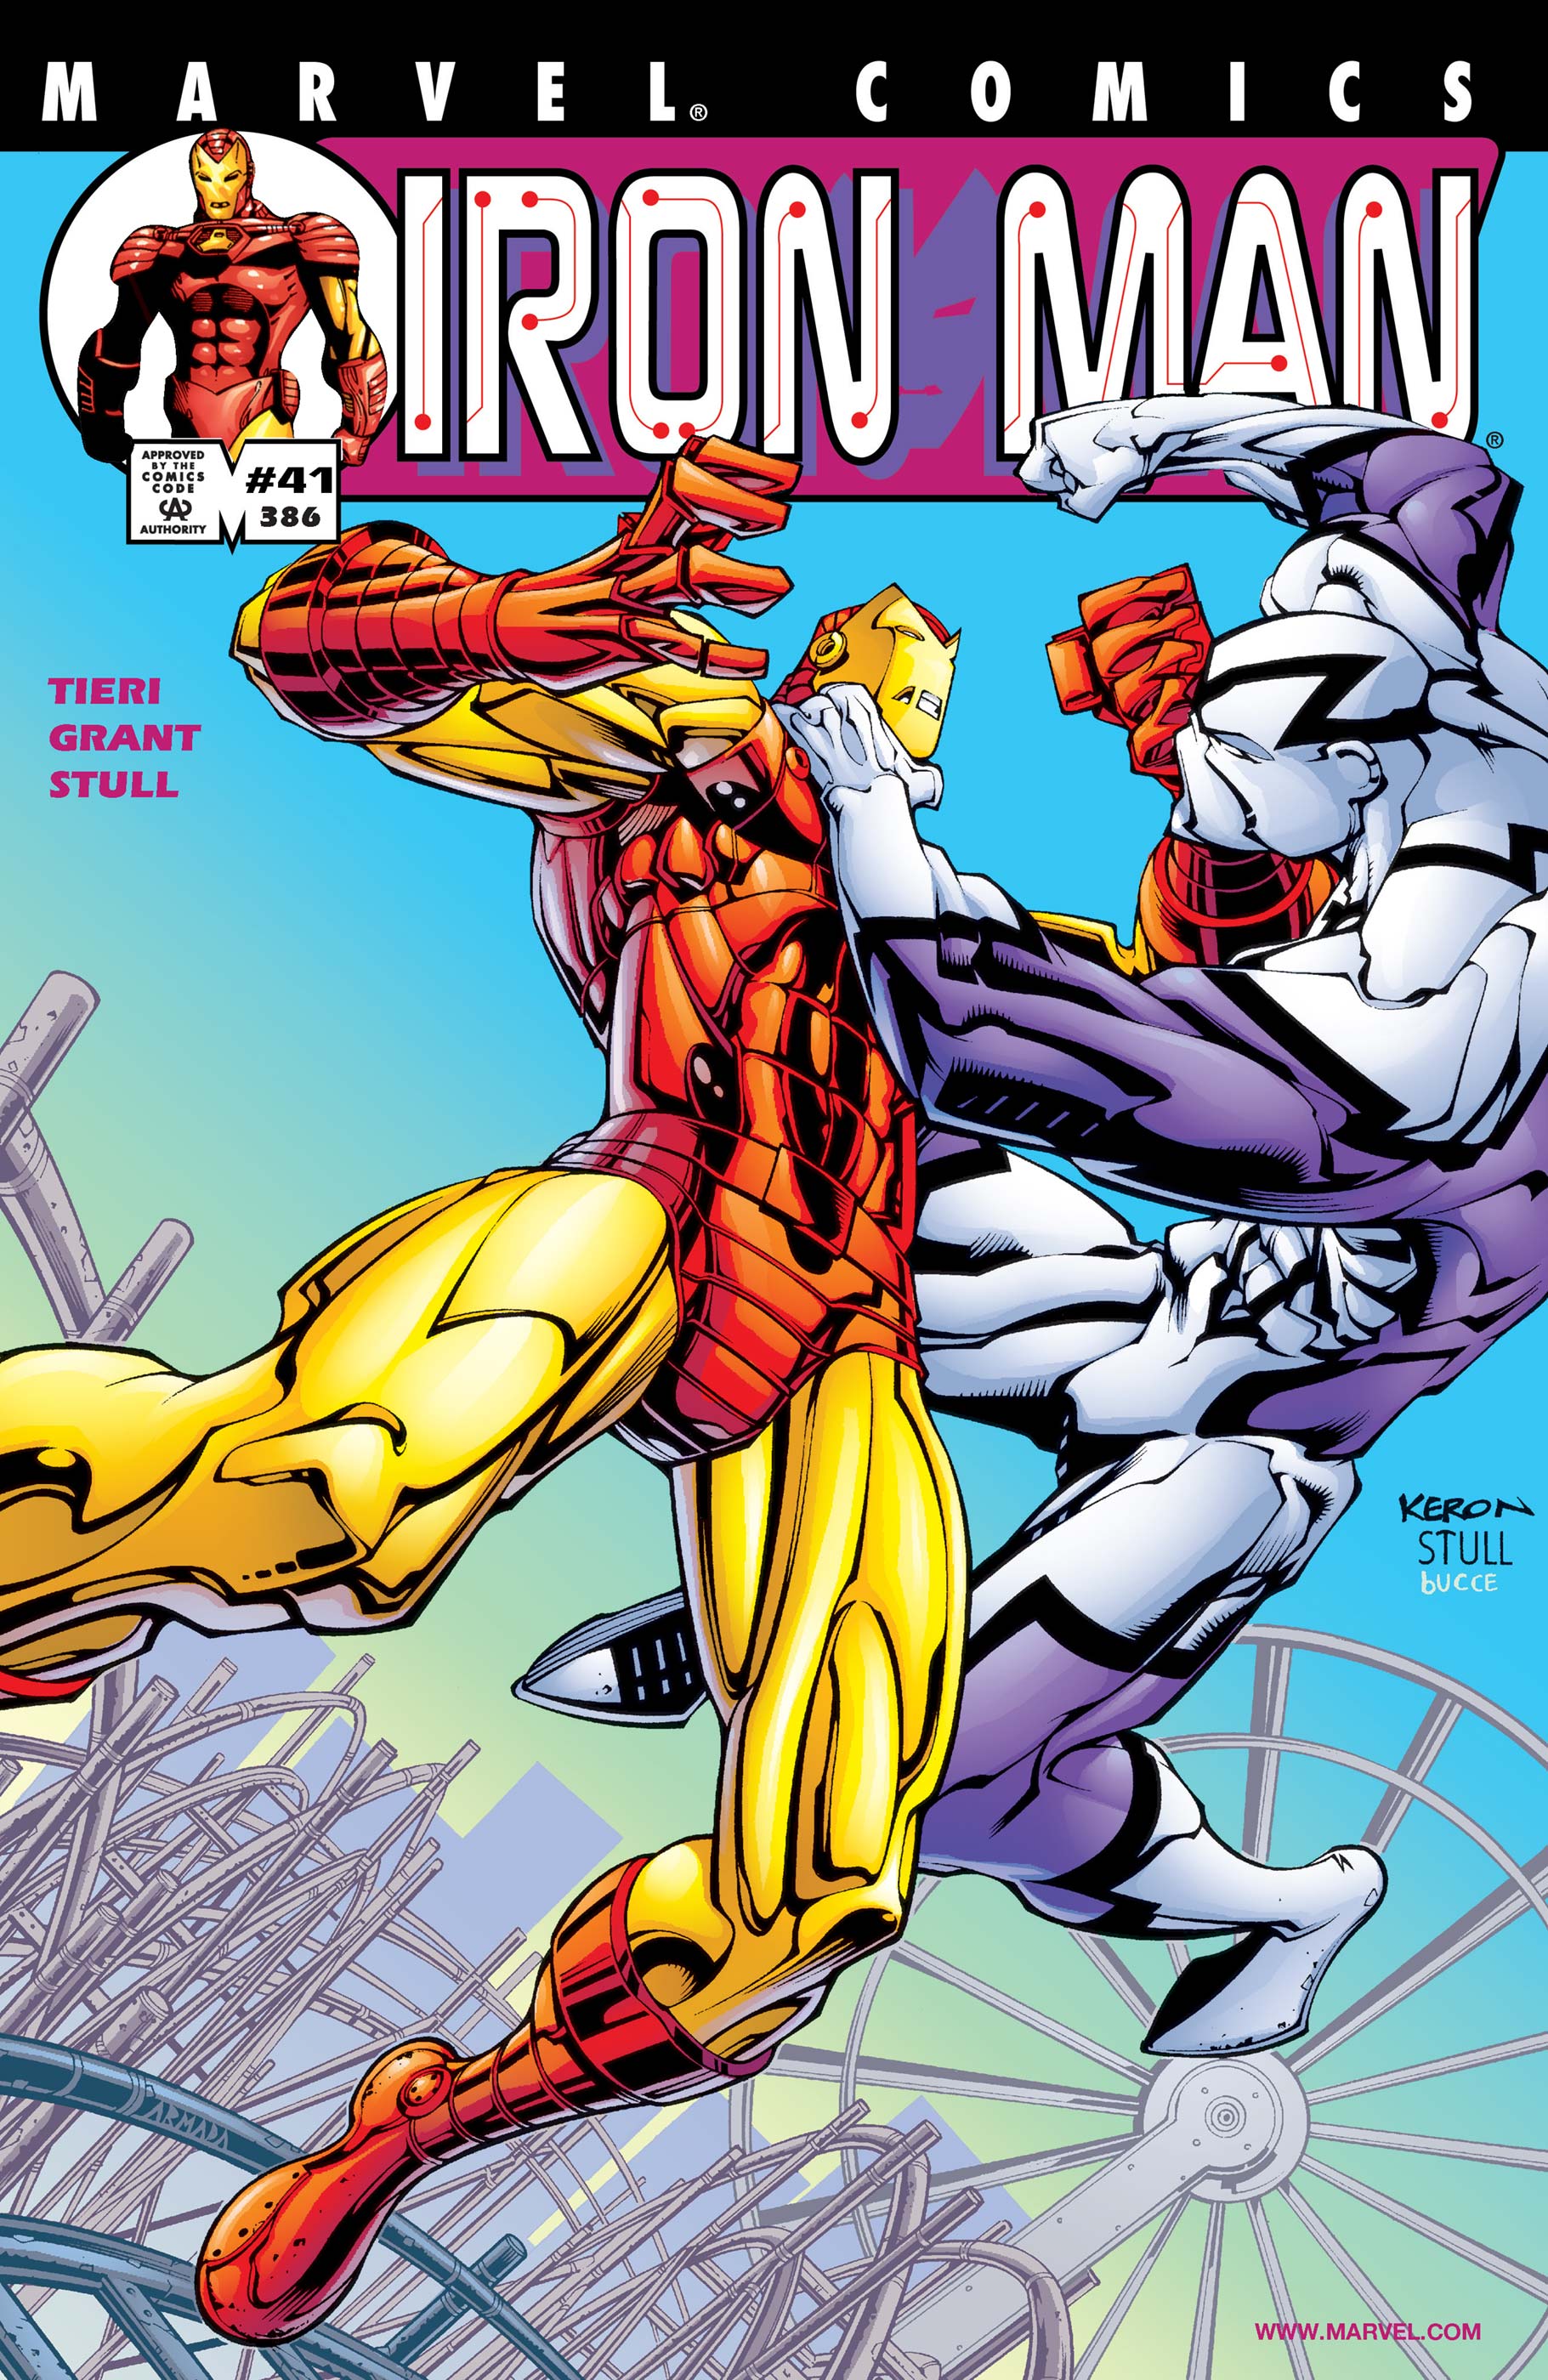 Iron Man (1998) #41